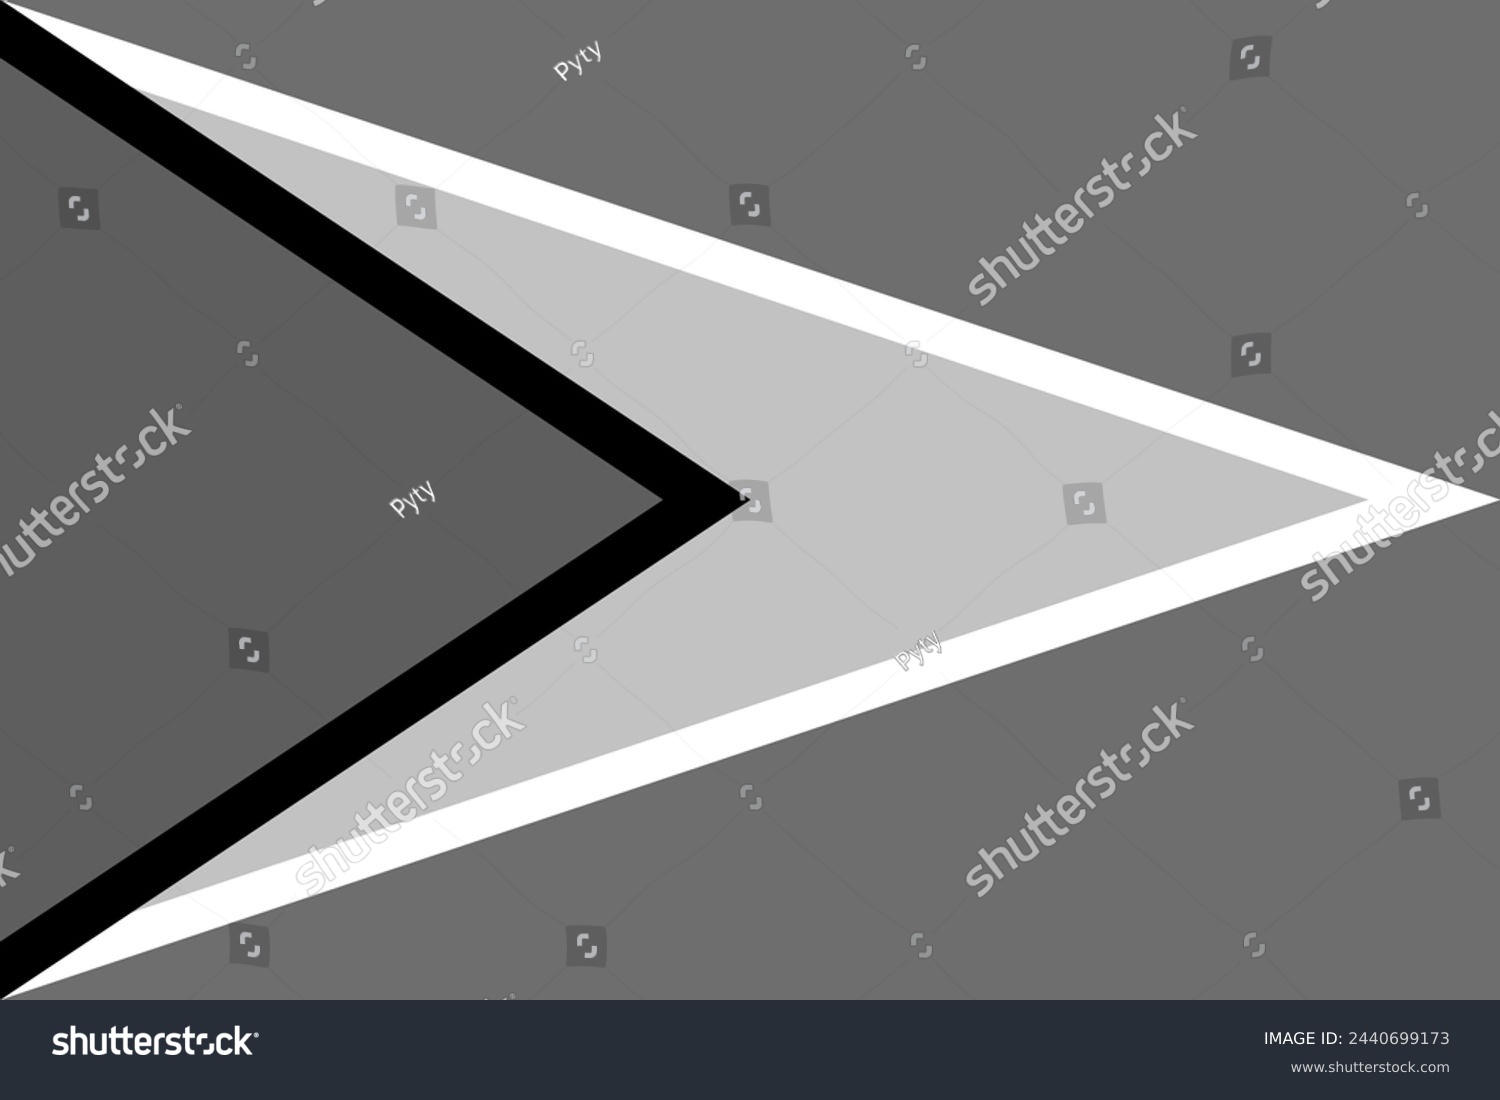 SVG of Guyana flag - greyscale monochrome vector illustration. Flag in black and white svg